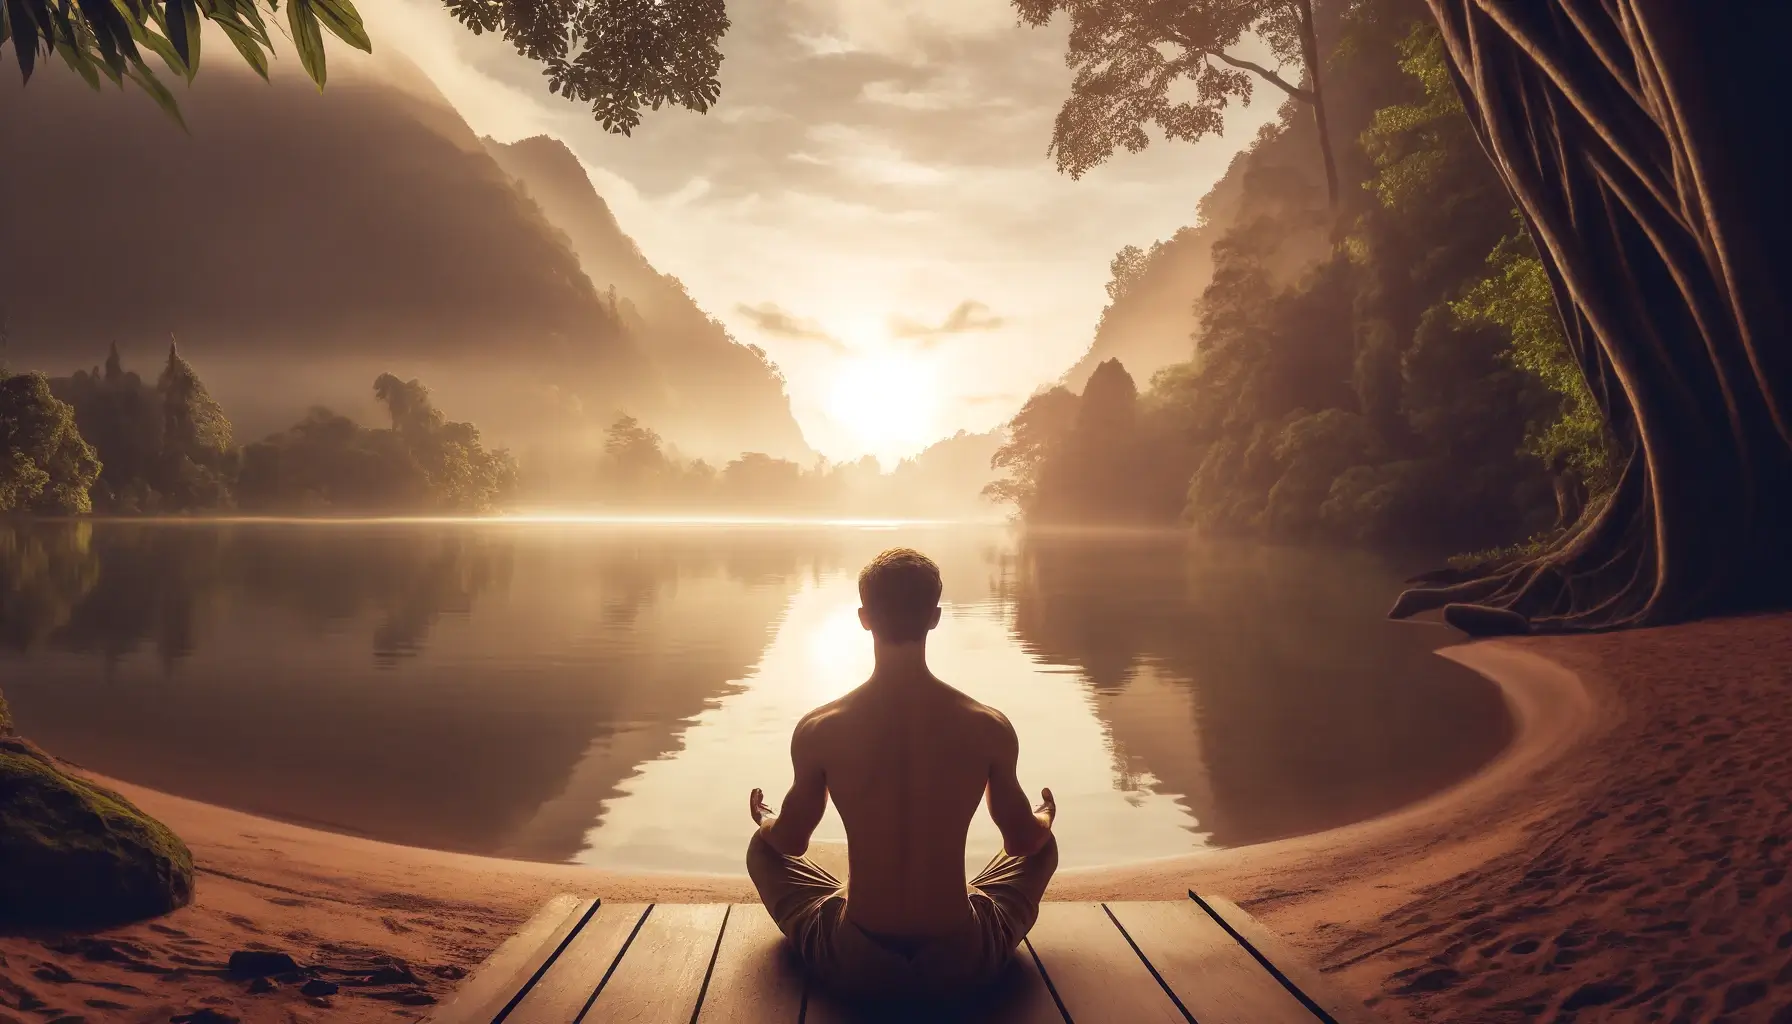 Daily life mindfulness meditation